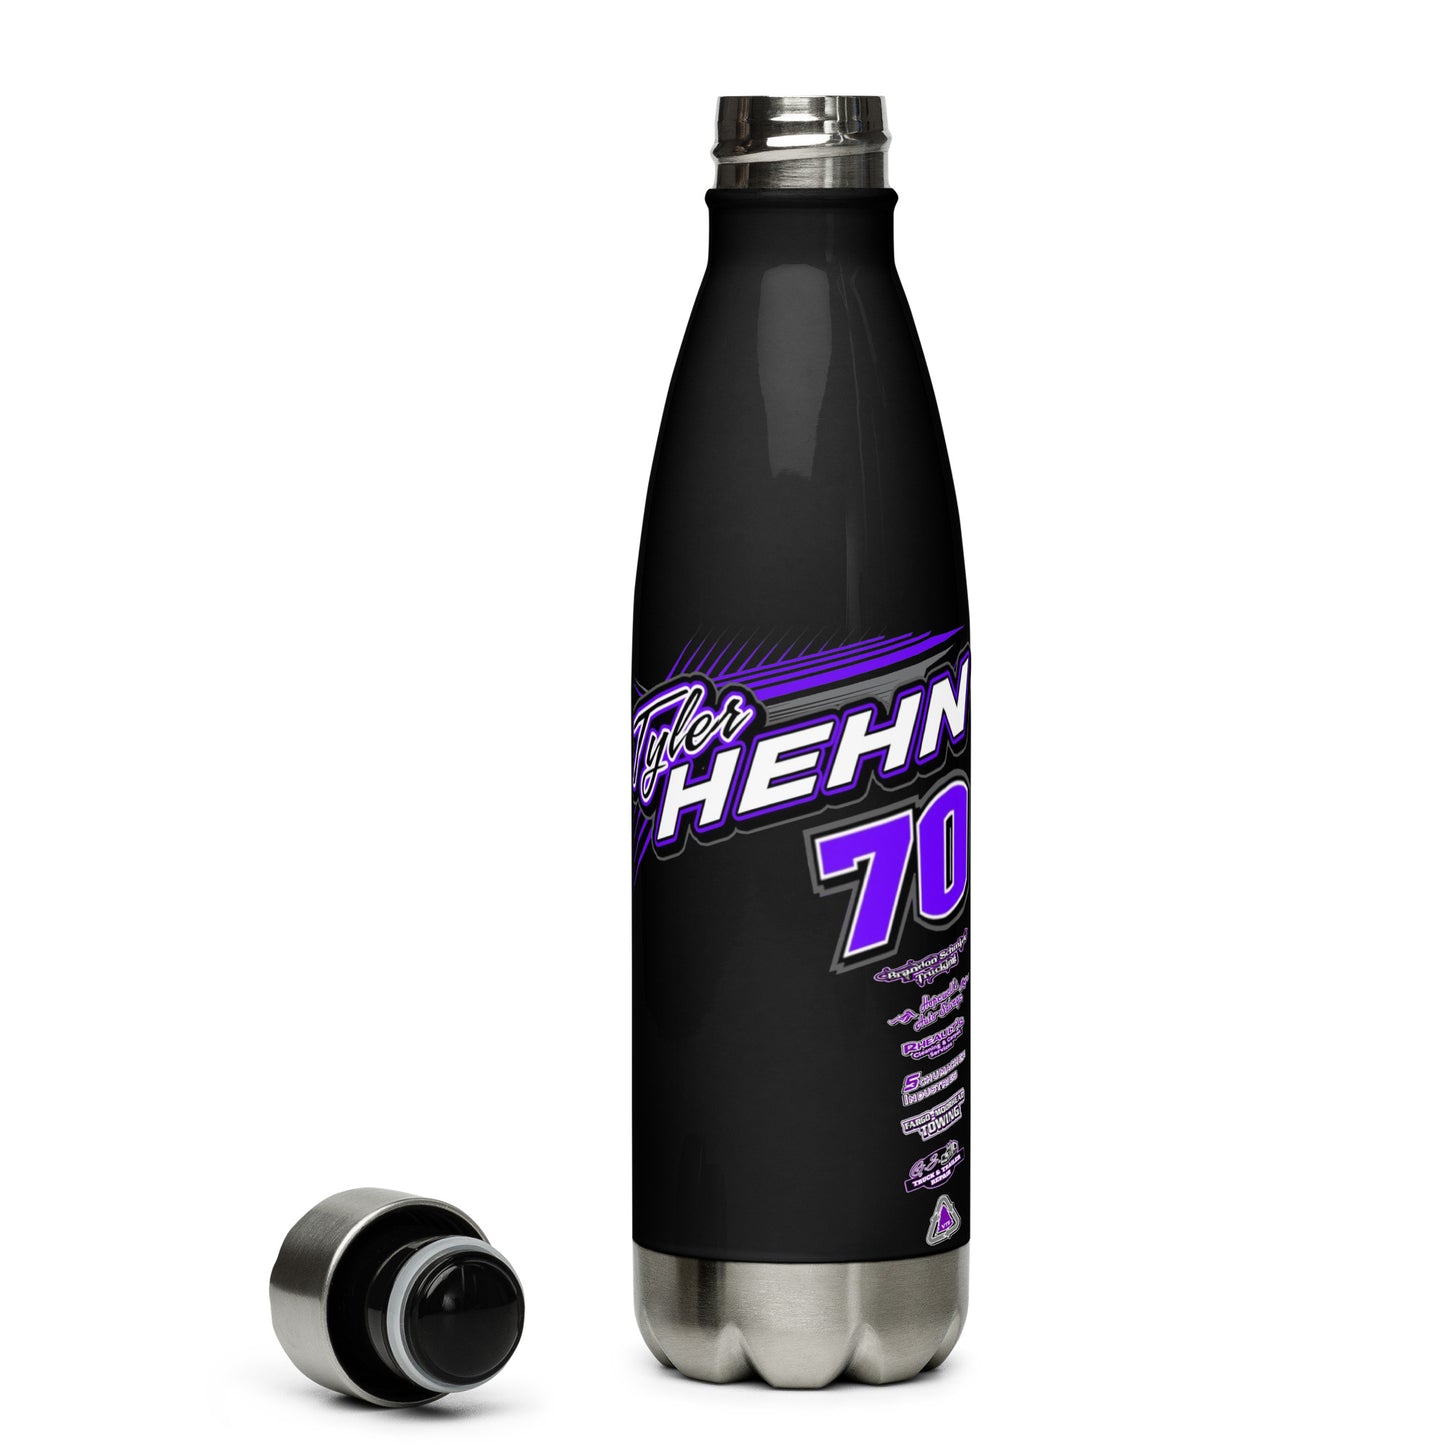 Tyler Hehn Stainless Steel Water Bottle